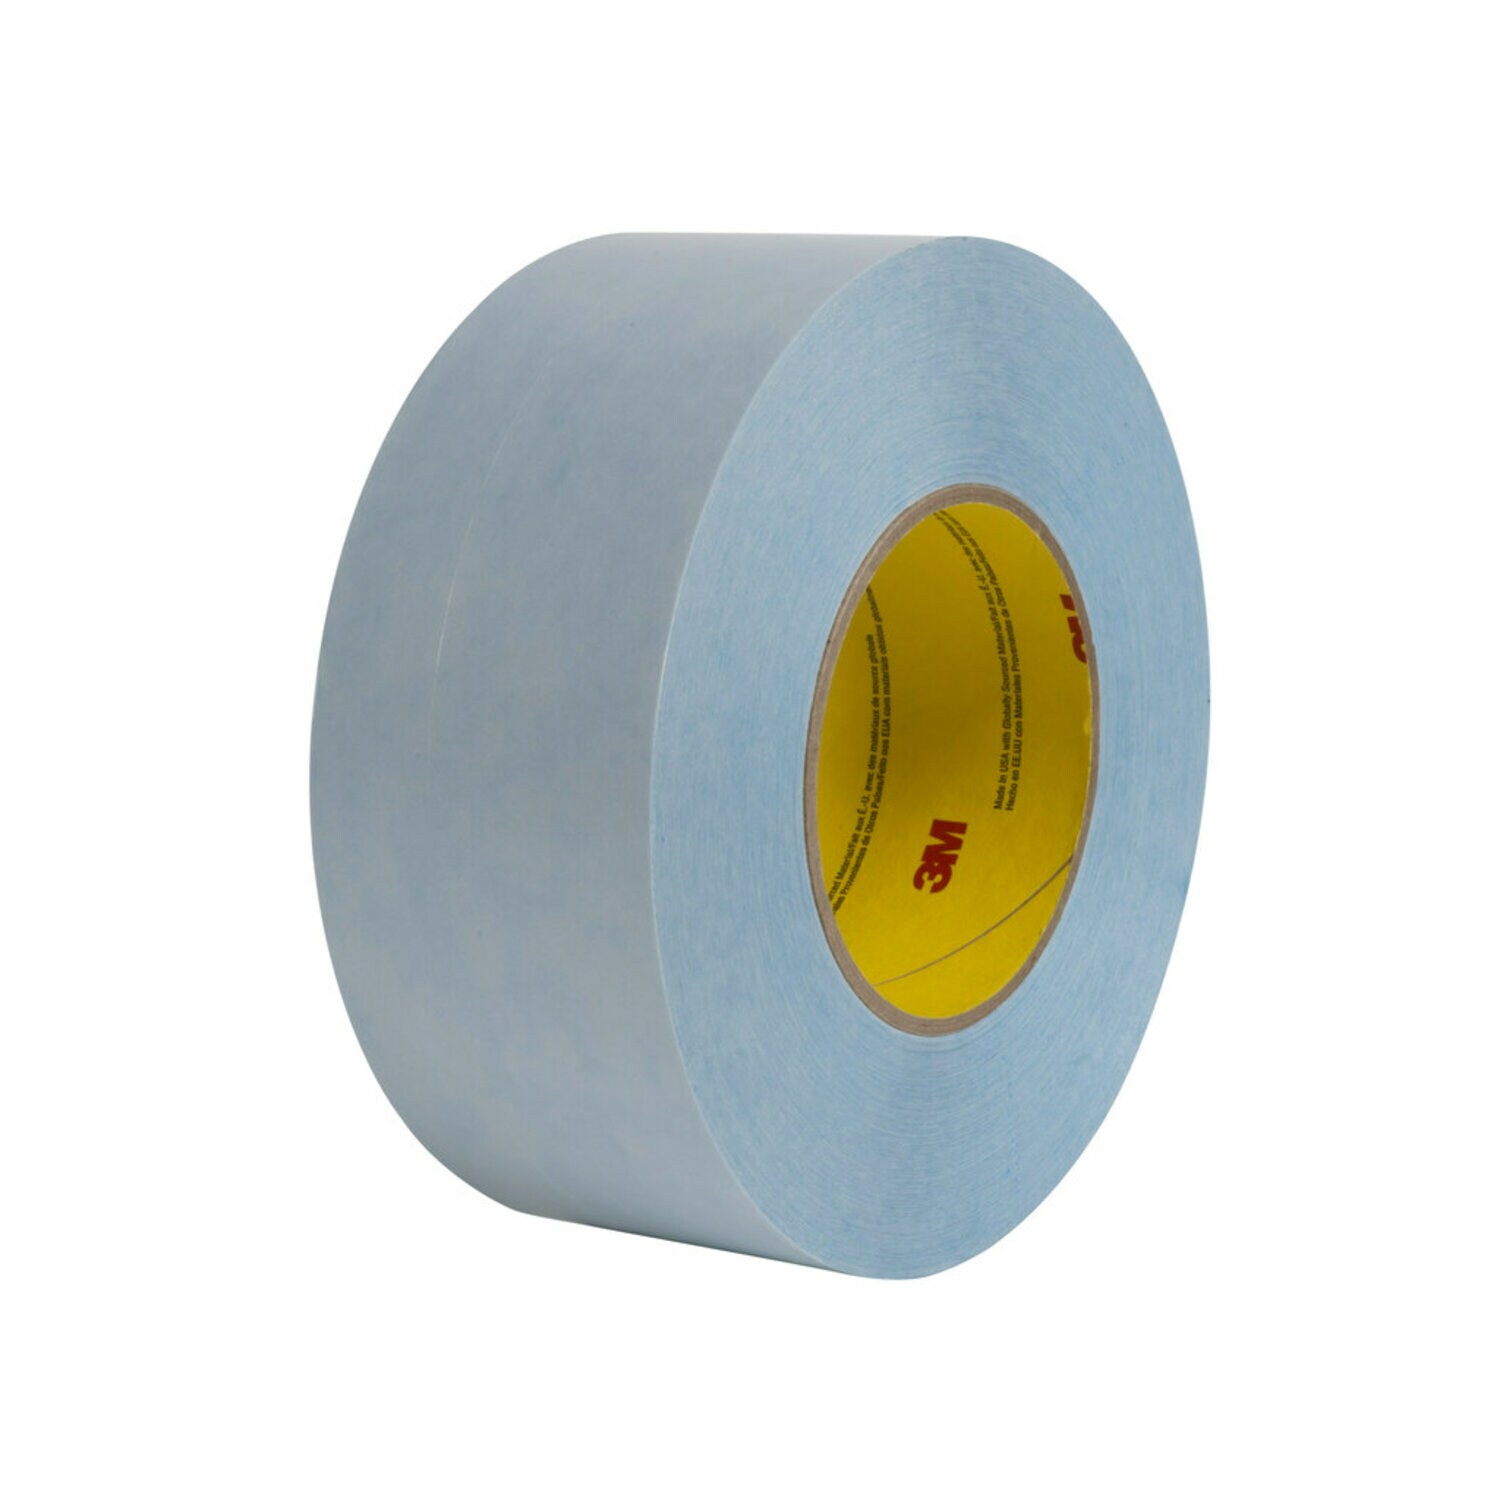 7100049329 - 3M Splittable Flying Splice Tape R3379, Blue, 60 mm x 55 m, 7.5 mil, 16
rolls per case